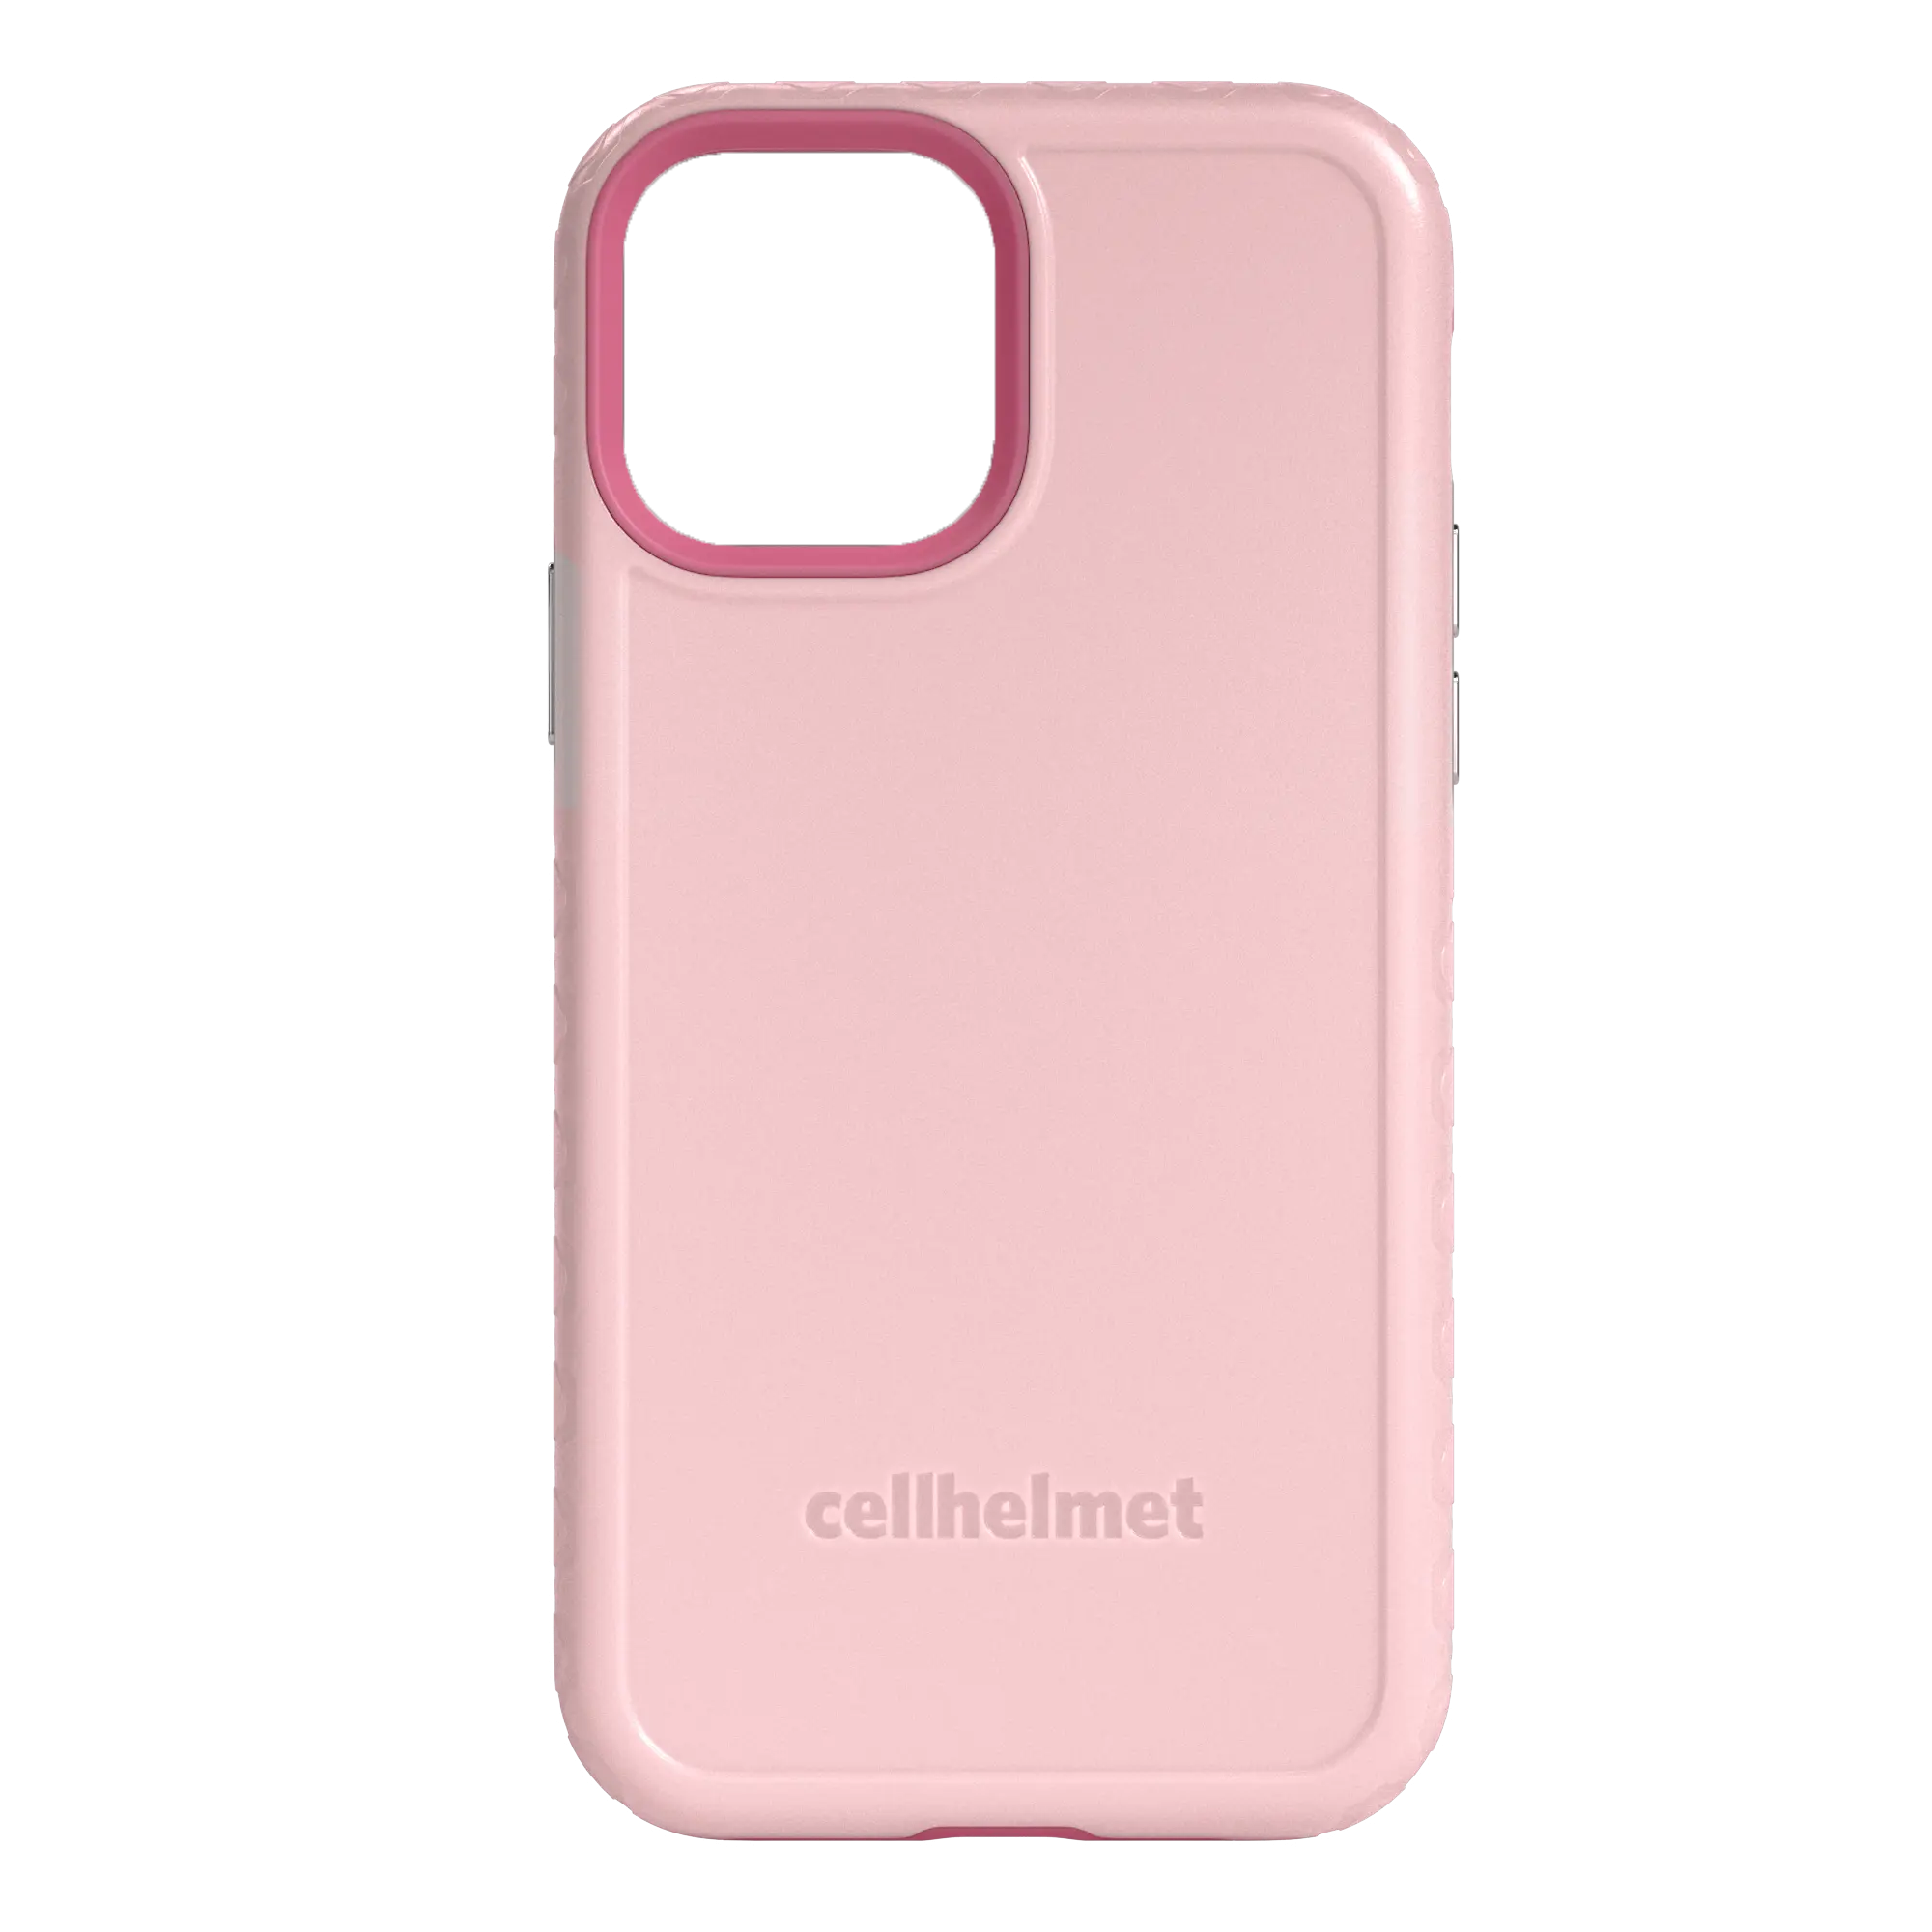 Pink cellhelmet Customizable Case for iPhone 12 Pro